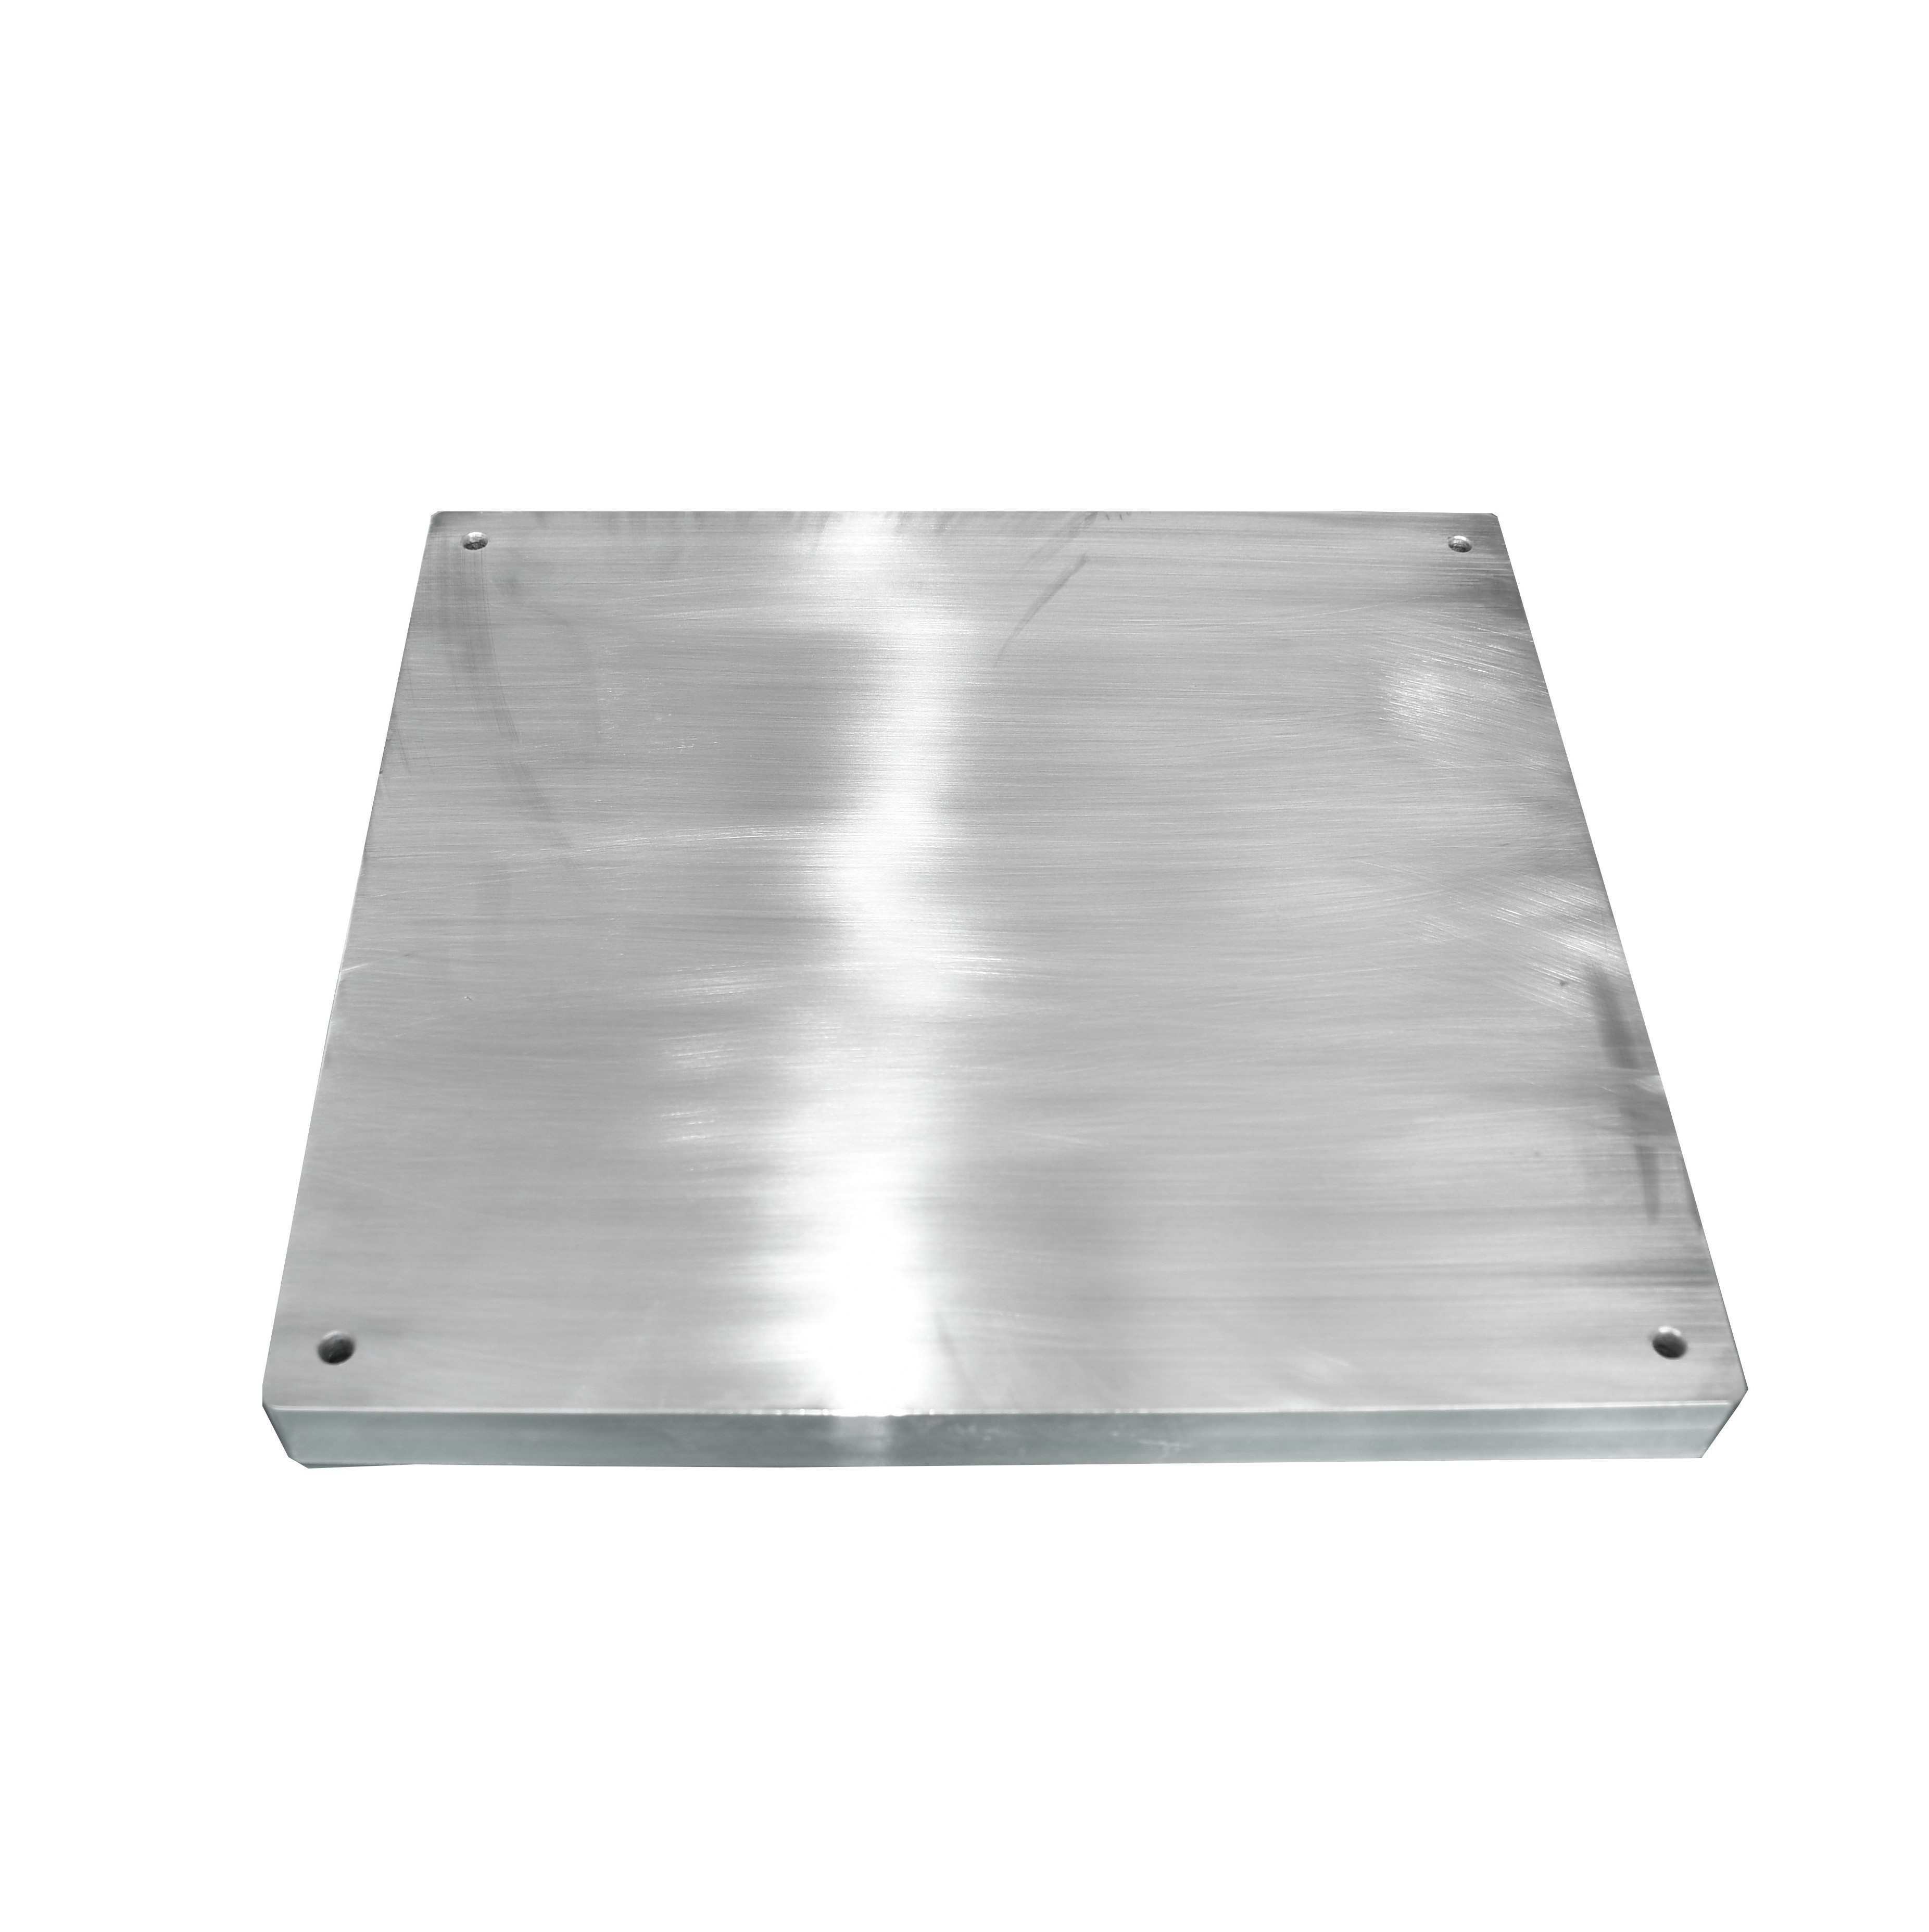 Aluminiumsplade Vandkøleblok